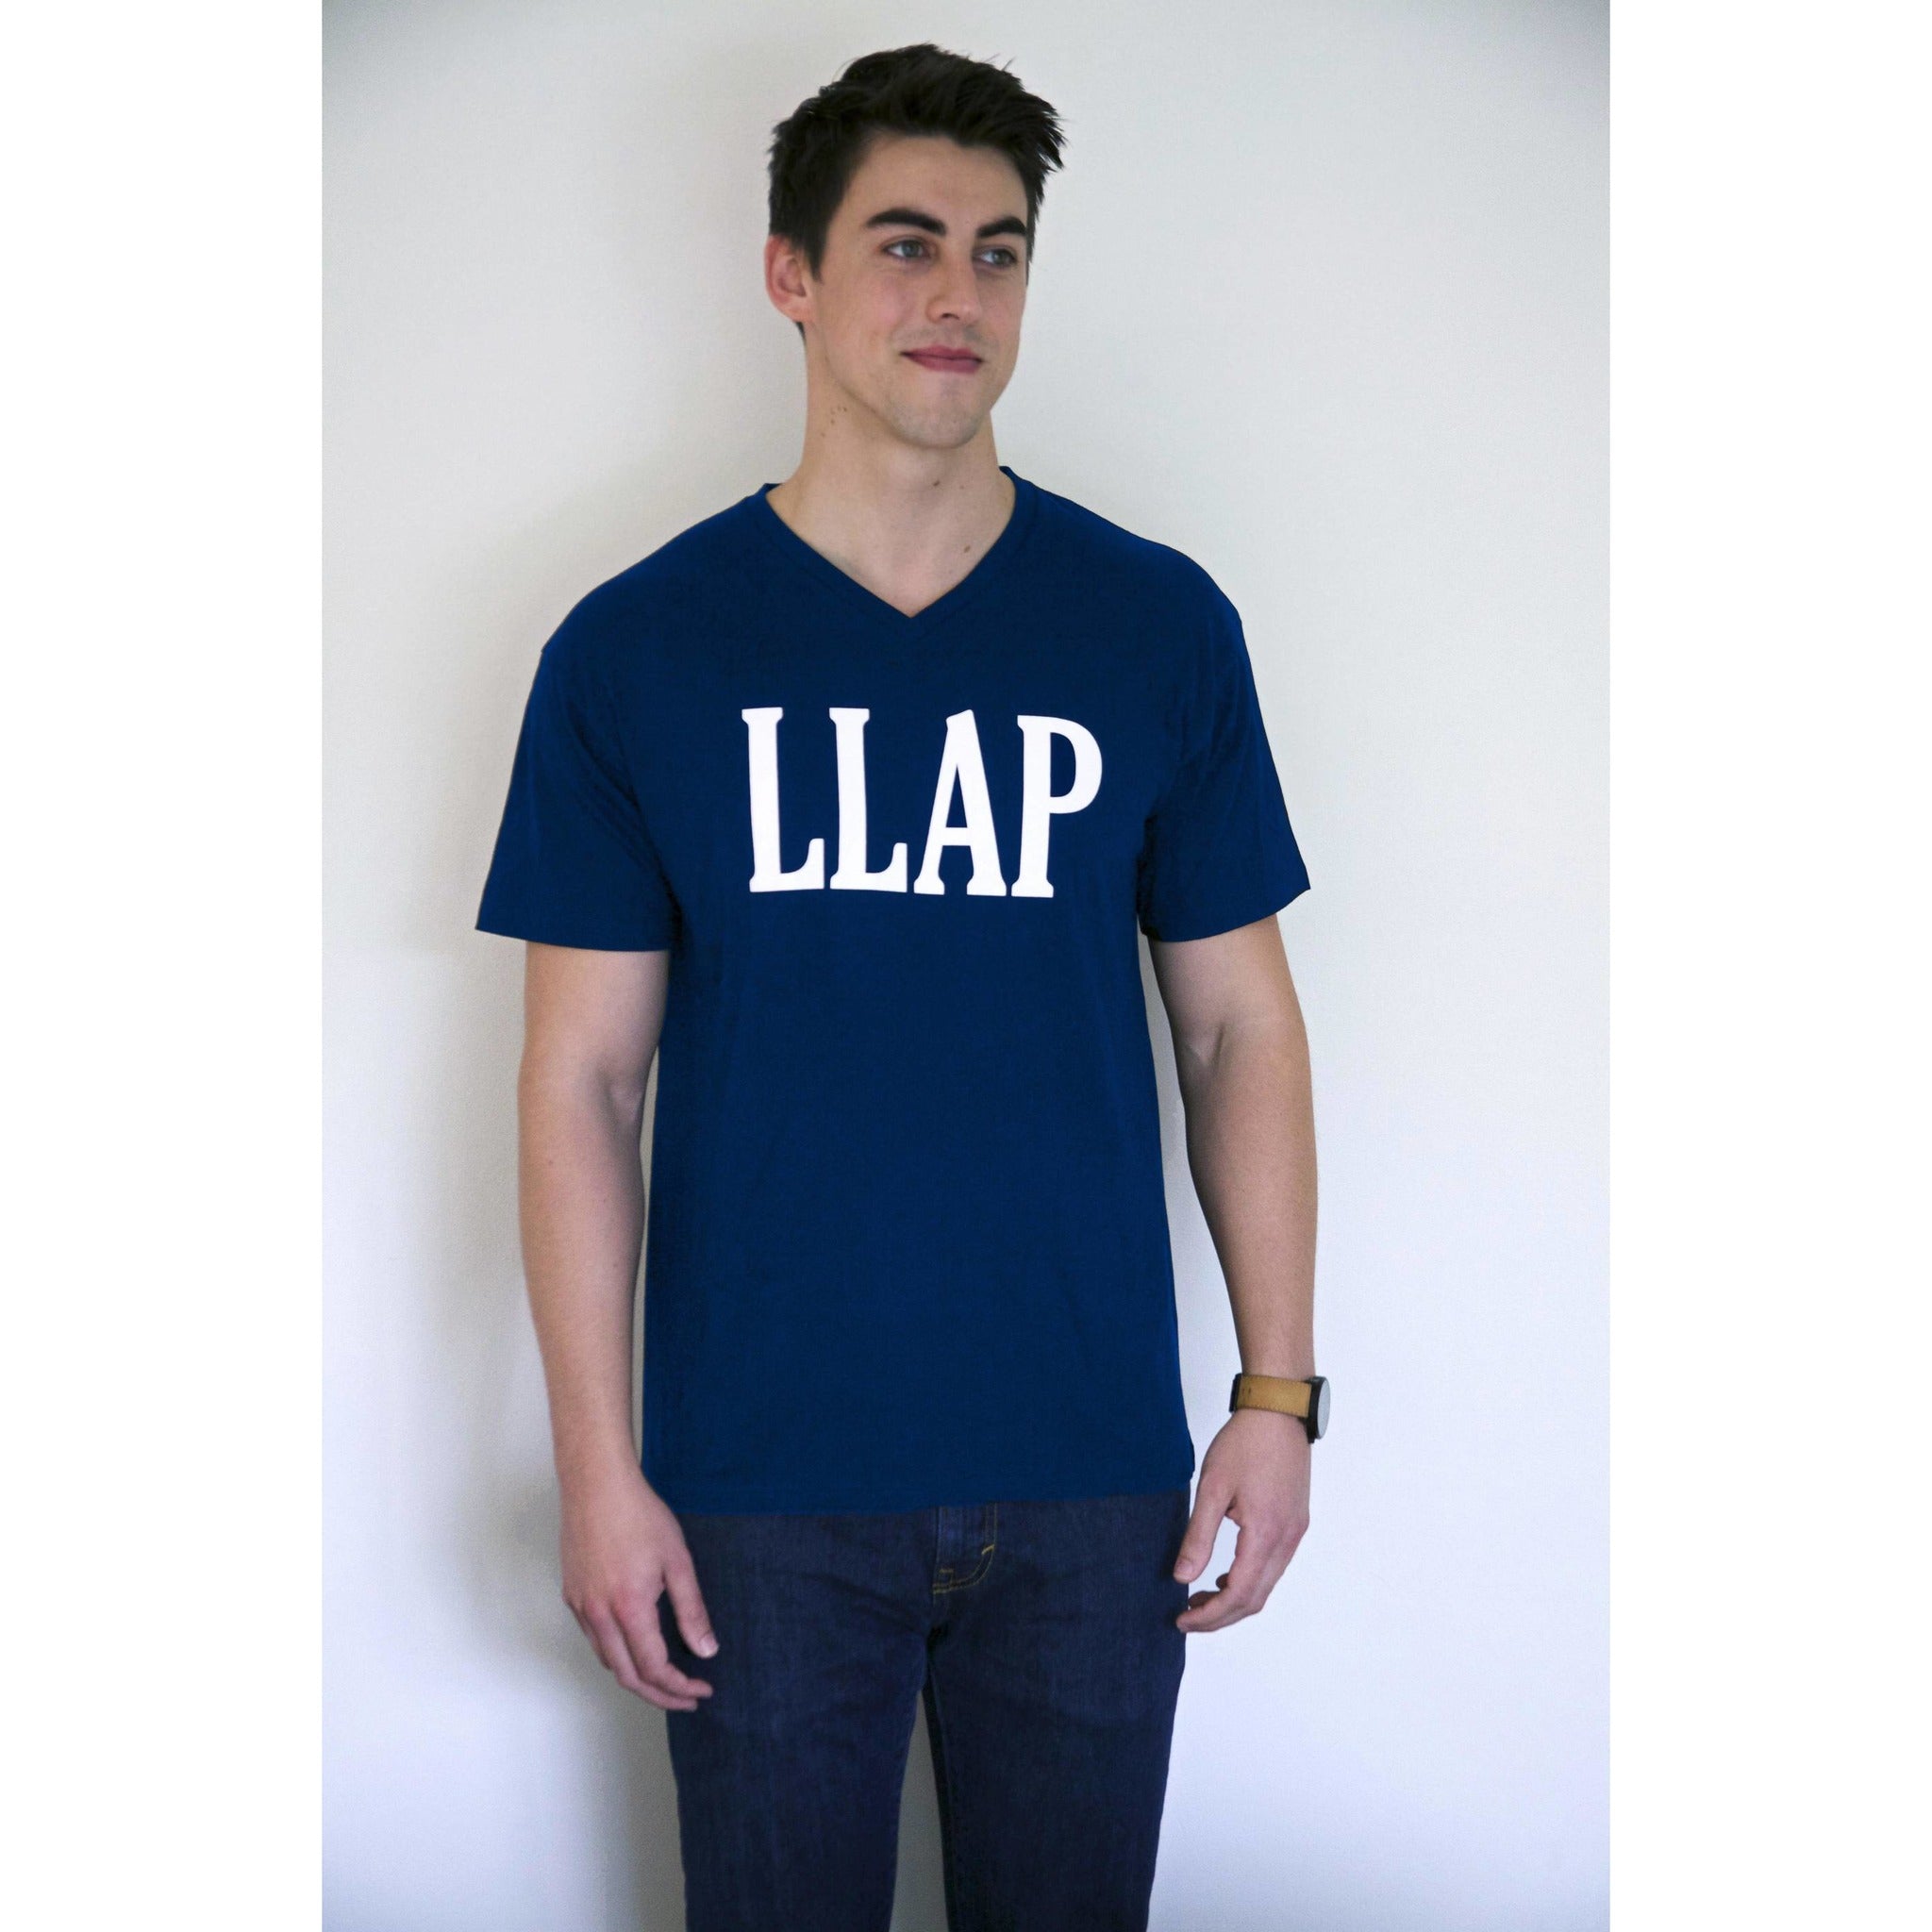 LLAP V-Neck T-Shirt in Royal Blue - Mens and Ladies Sizes - Leonard Nimoy's Shop LLAP